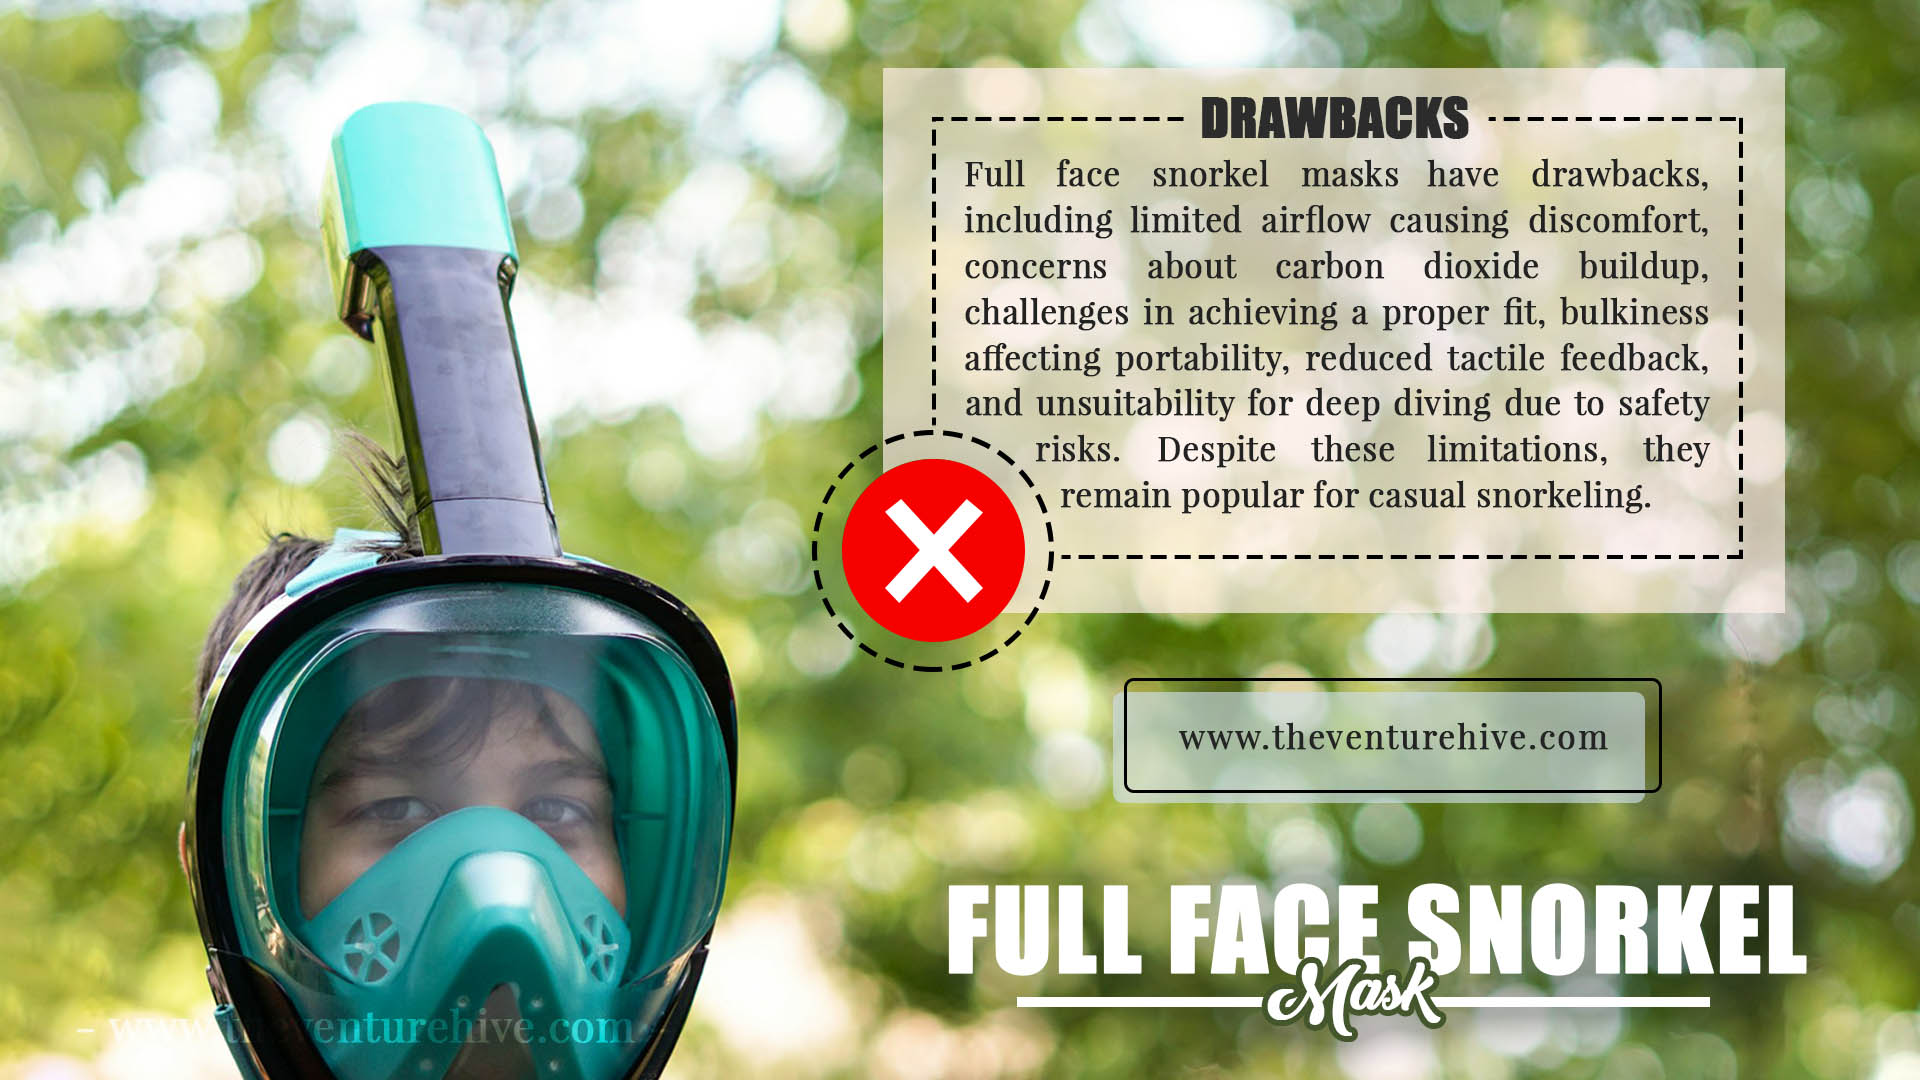 Drawbacks of full face snorkel masks